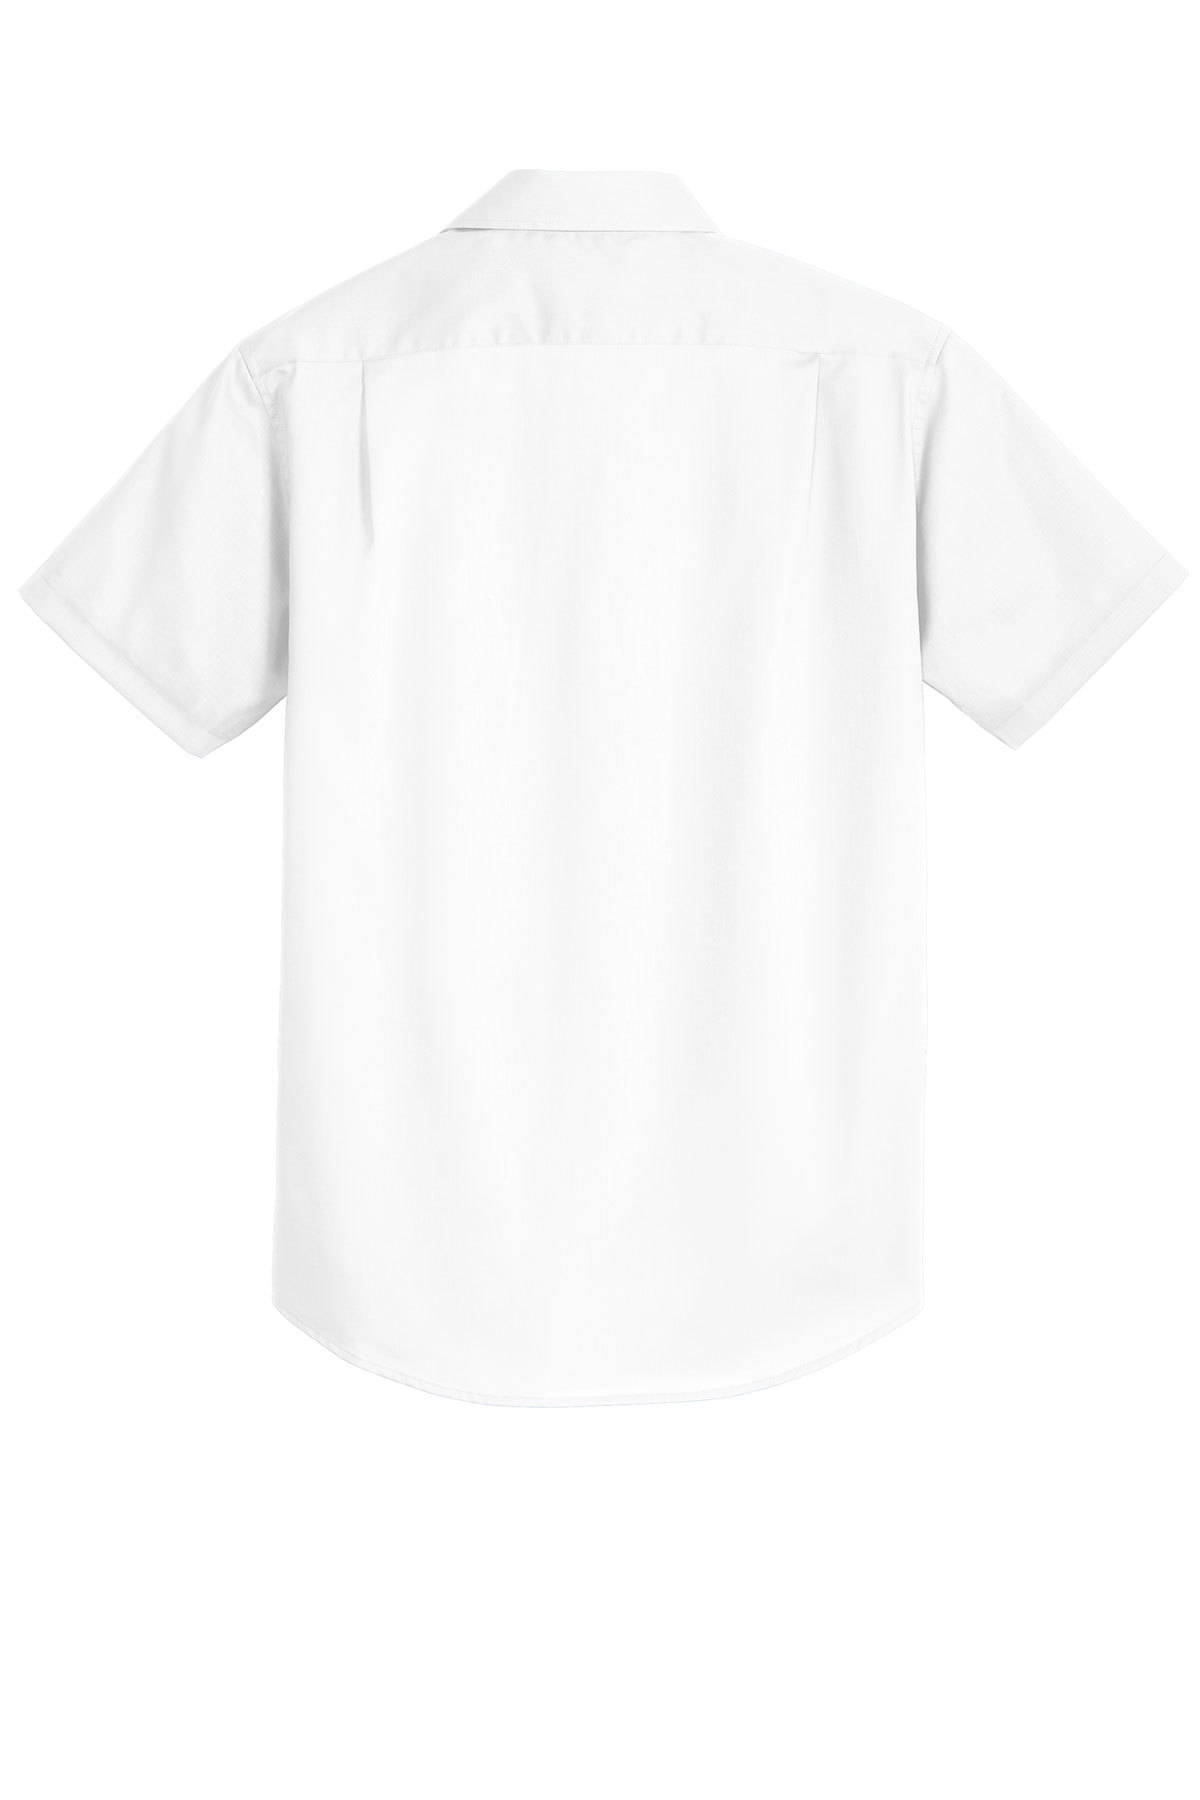 Port Authority Short Sleeve SuperPro Twill Shirt | Product | SanMar